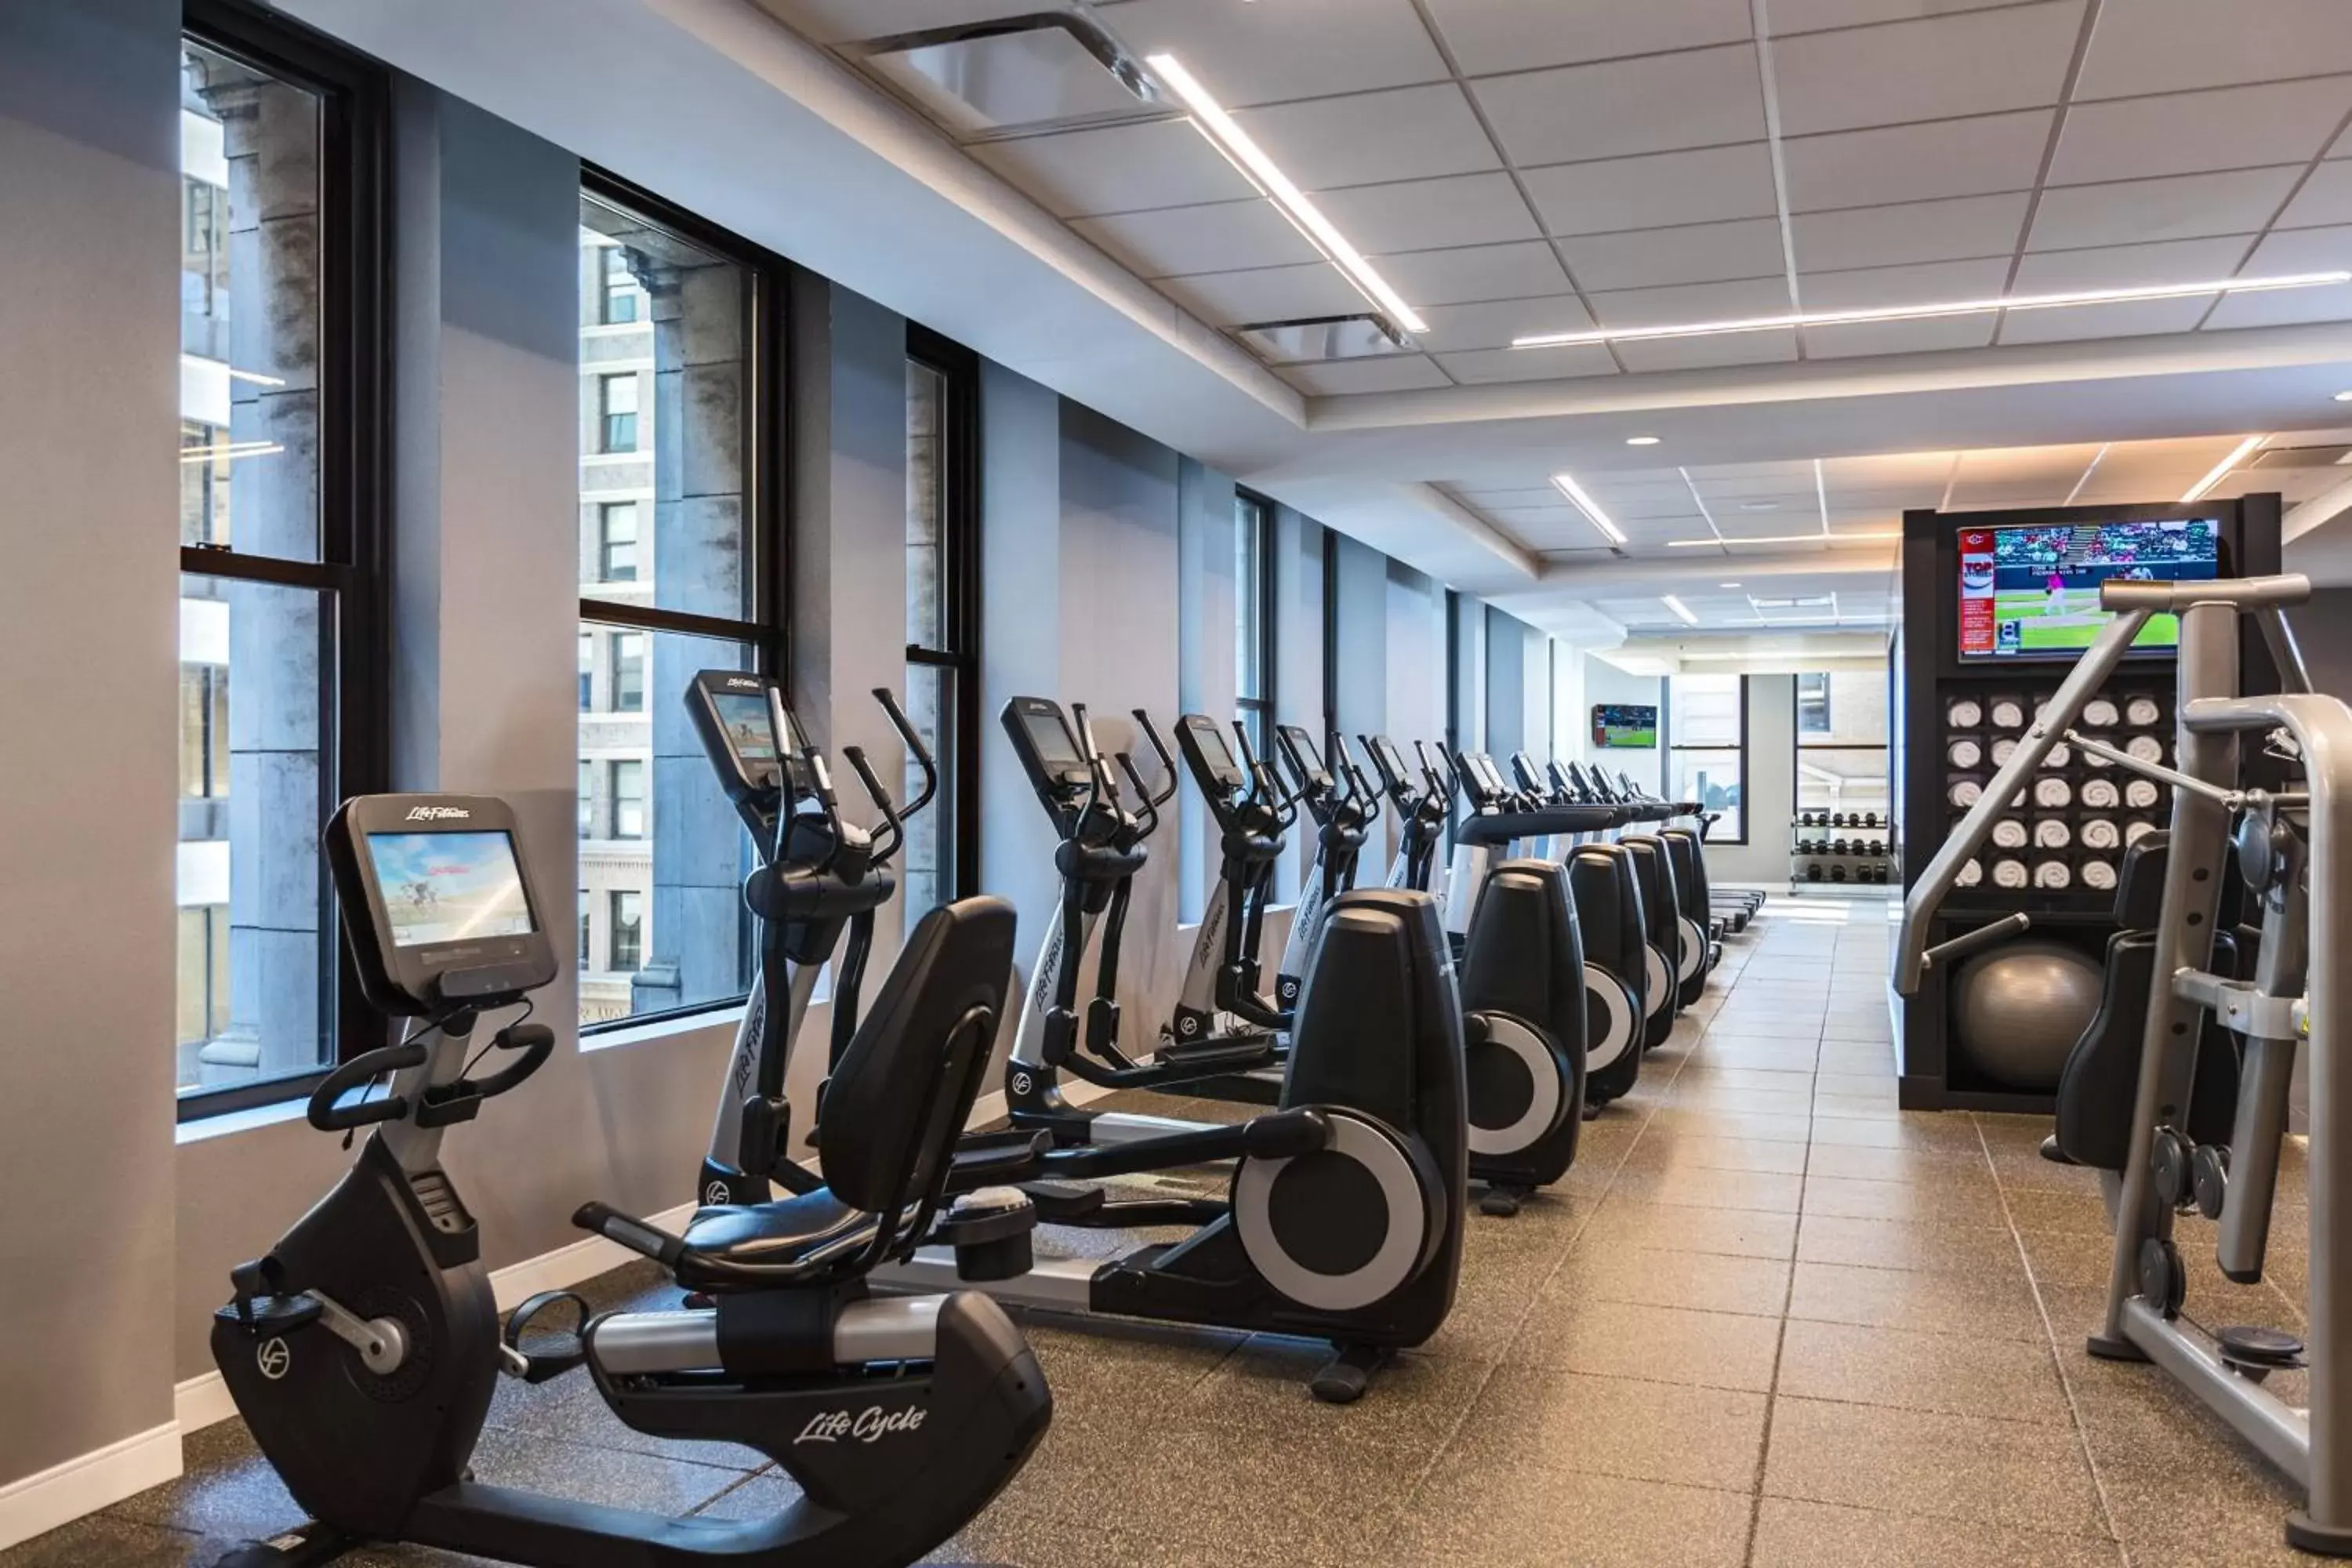 Fitness centre/facilities, Fitness Center/Facilities in Renaissance Cincinnati Downtown Hotel